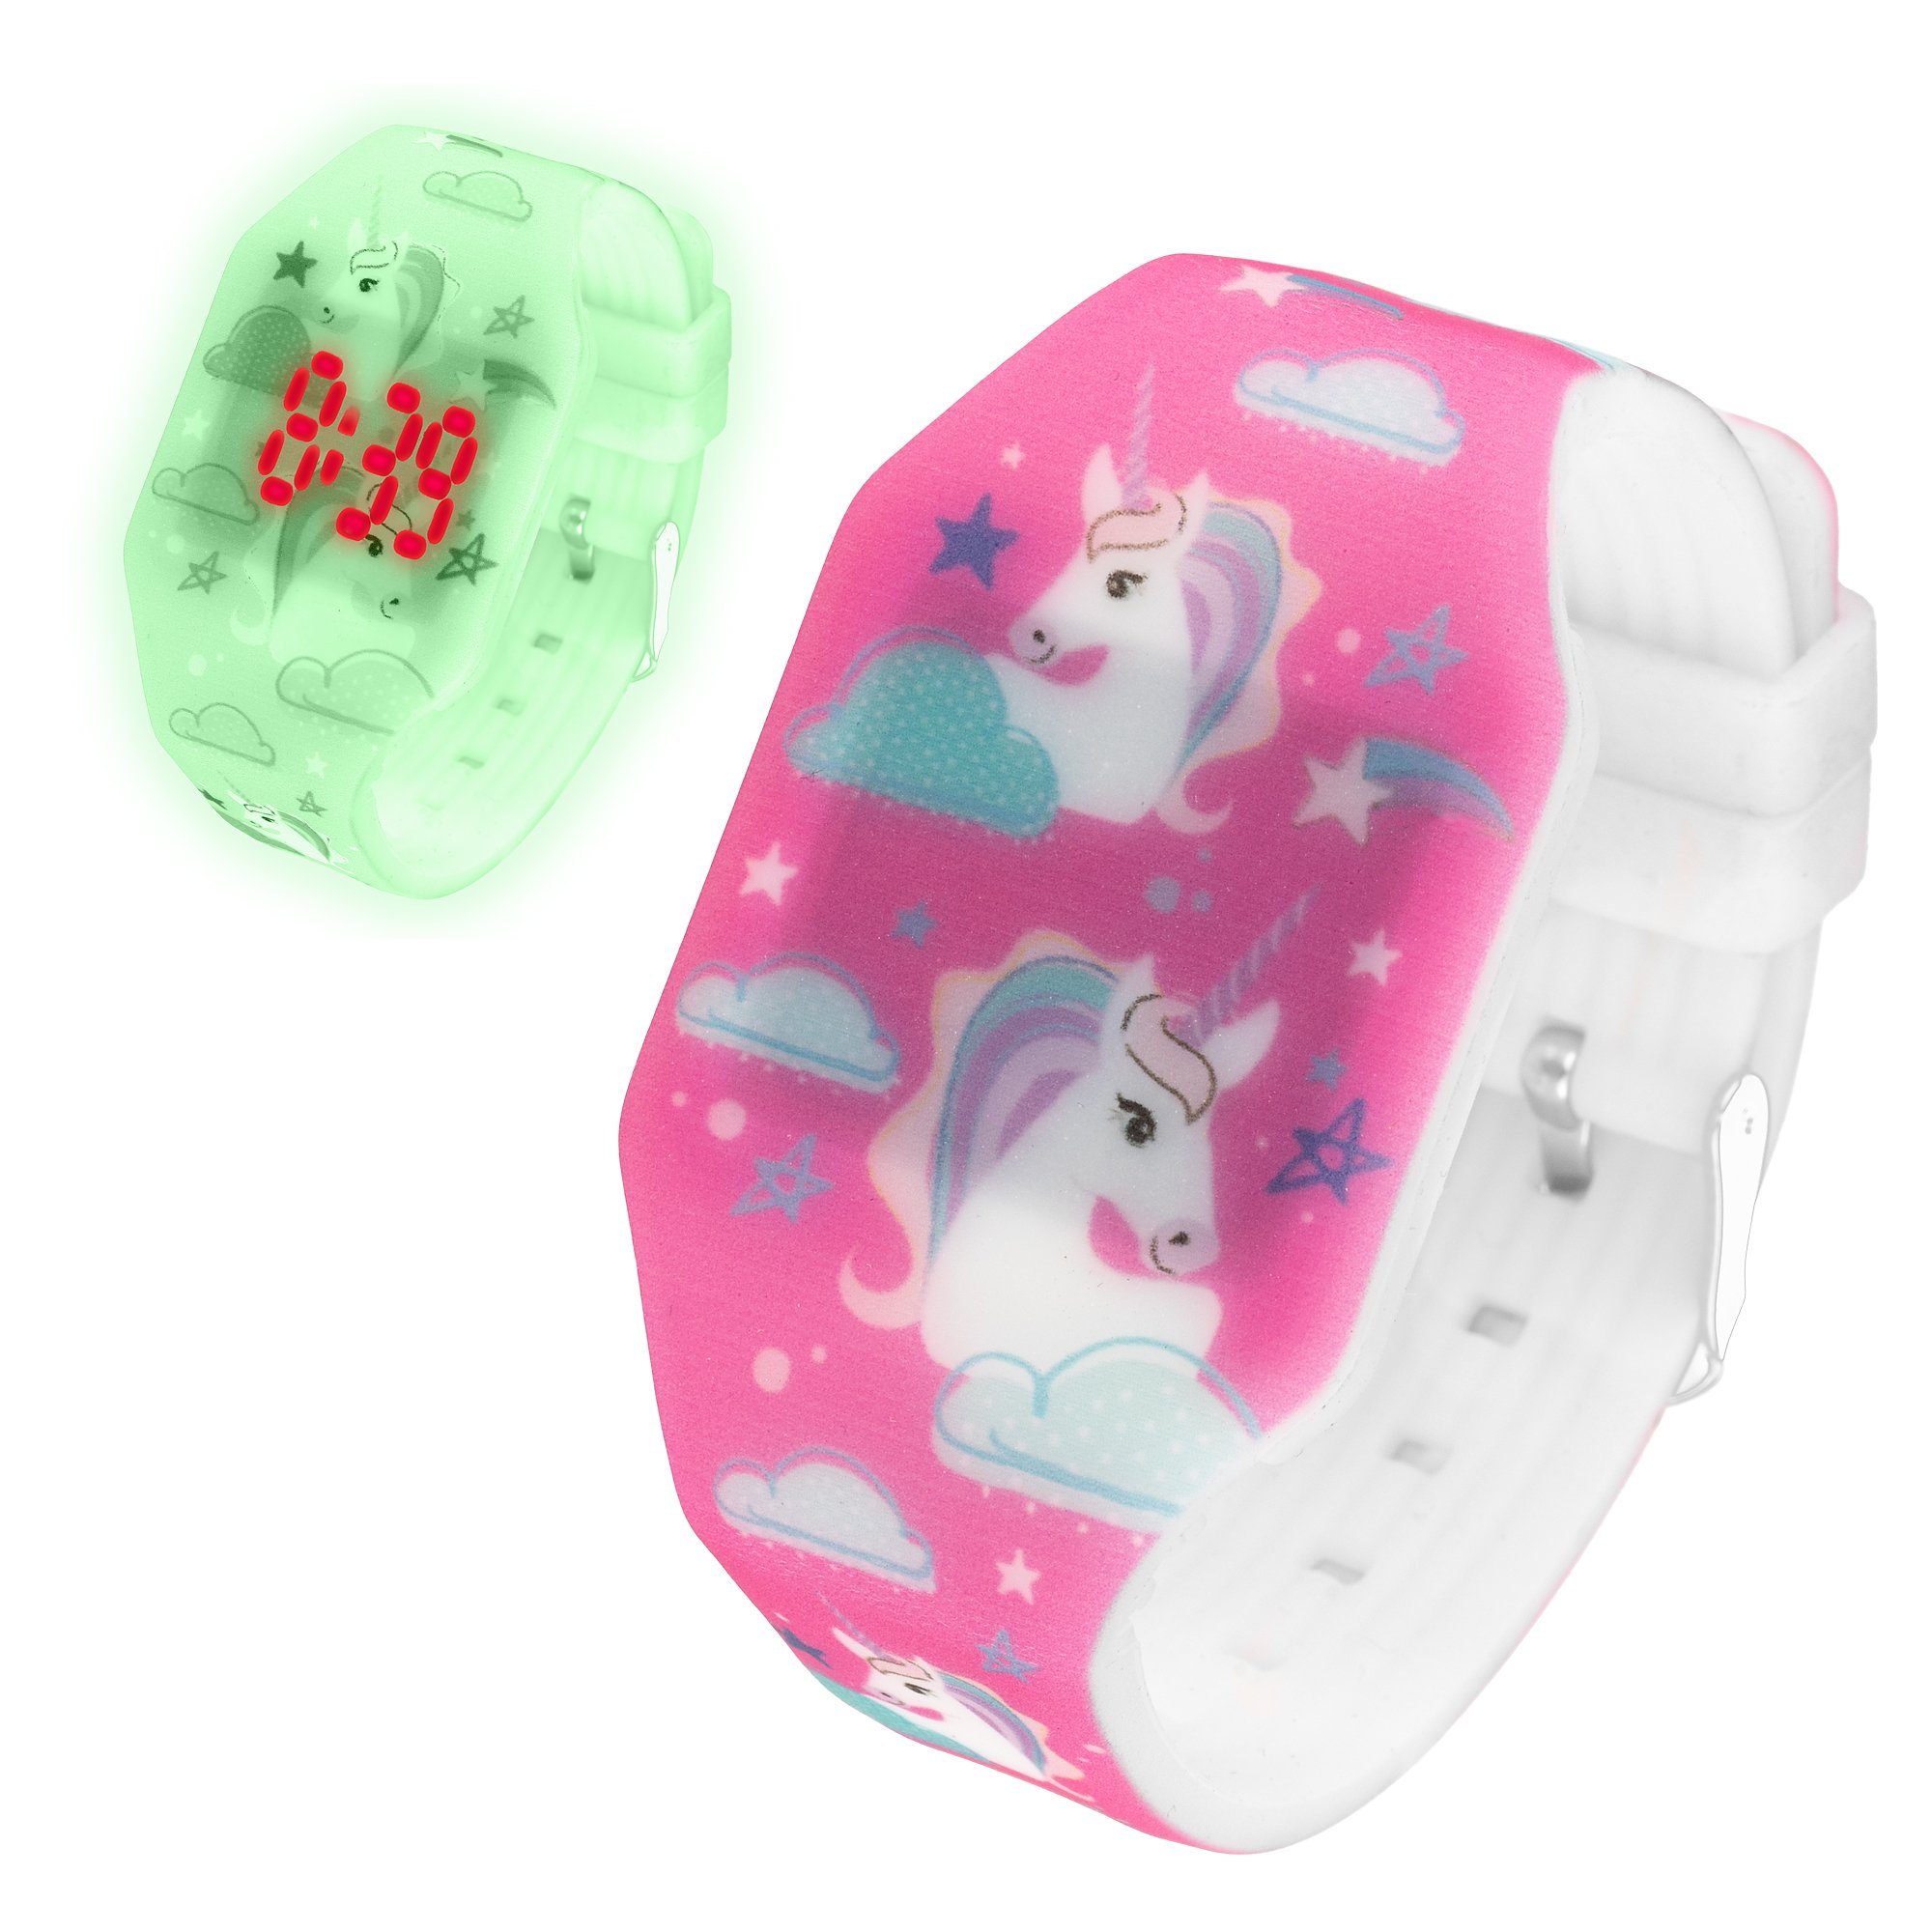 Taffstyle Quarzuhr Kinder Mädchen Bunt Silikon Sportuhr Uhr, Lernuhr Kinderuhr Einhorn LED Regenbogen Fluoreszierend Armbanduhr Digital pink